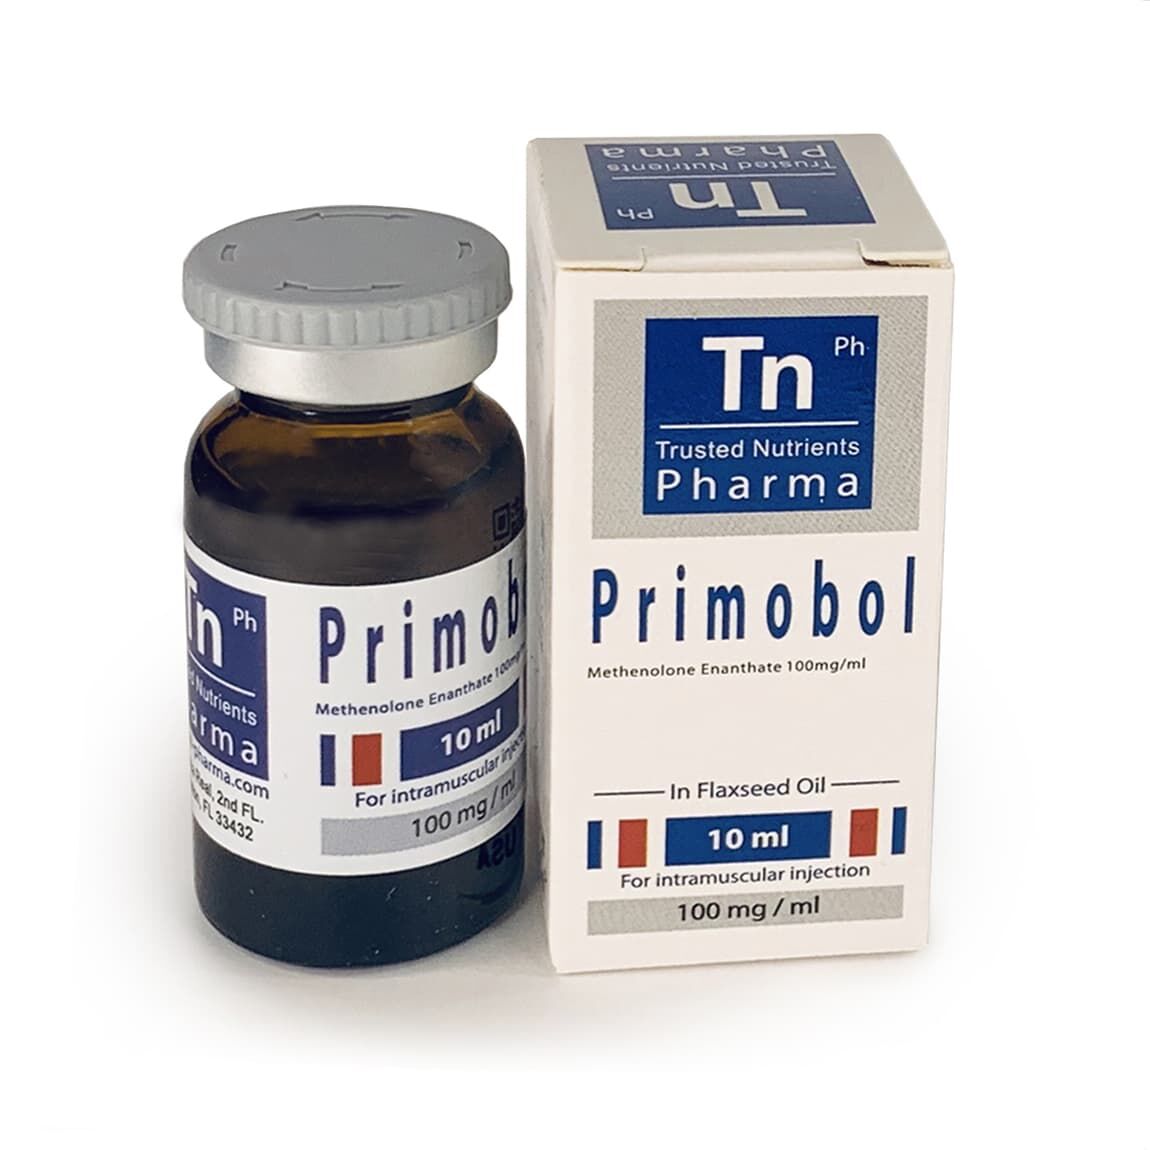 Primobol TN Pharma (100mg/ml Метенолон енантат) - Zob.BG